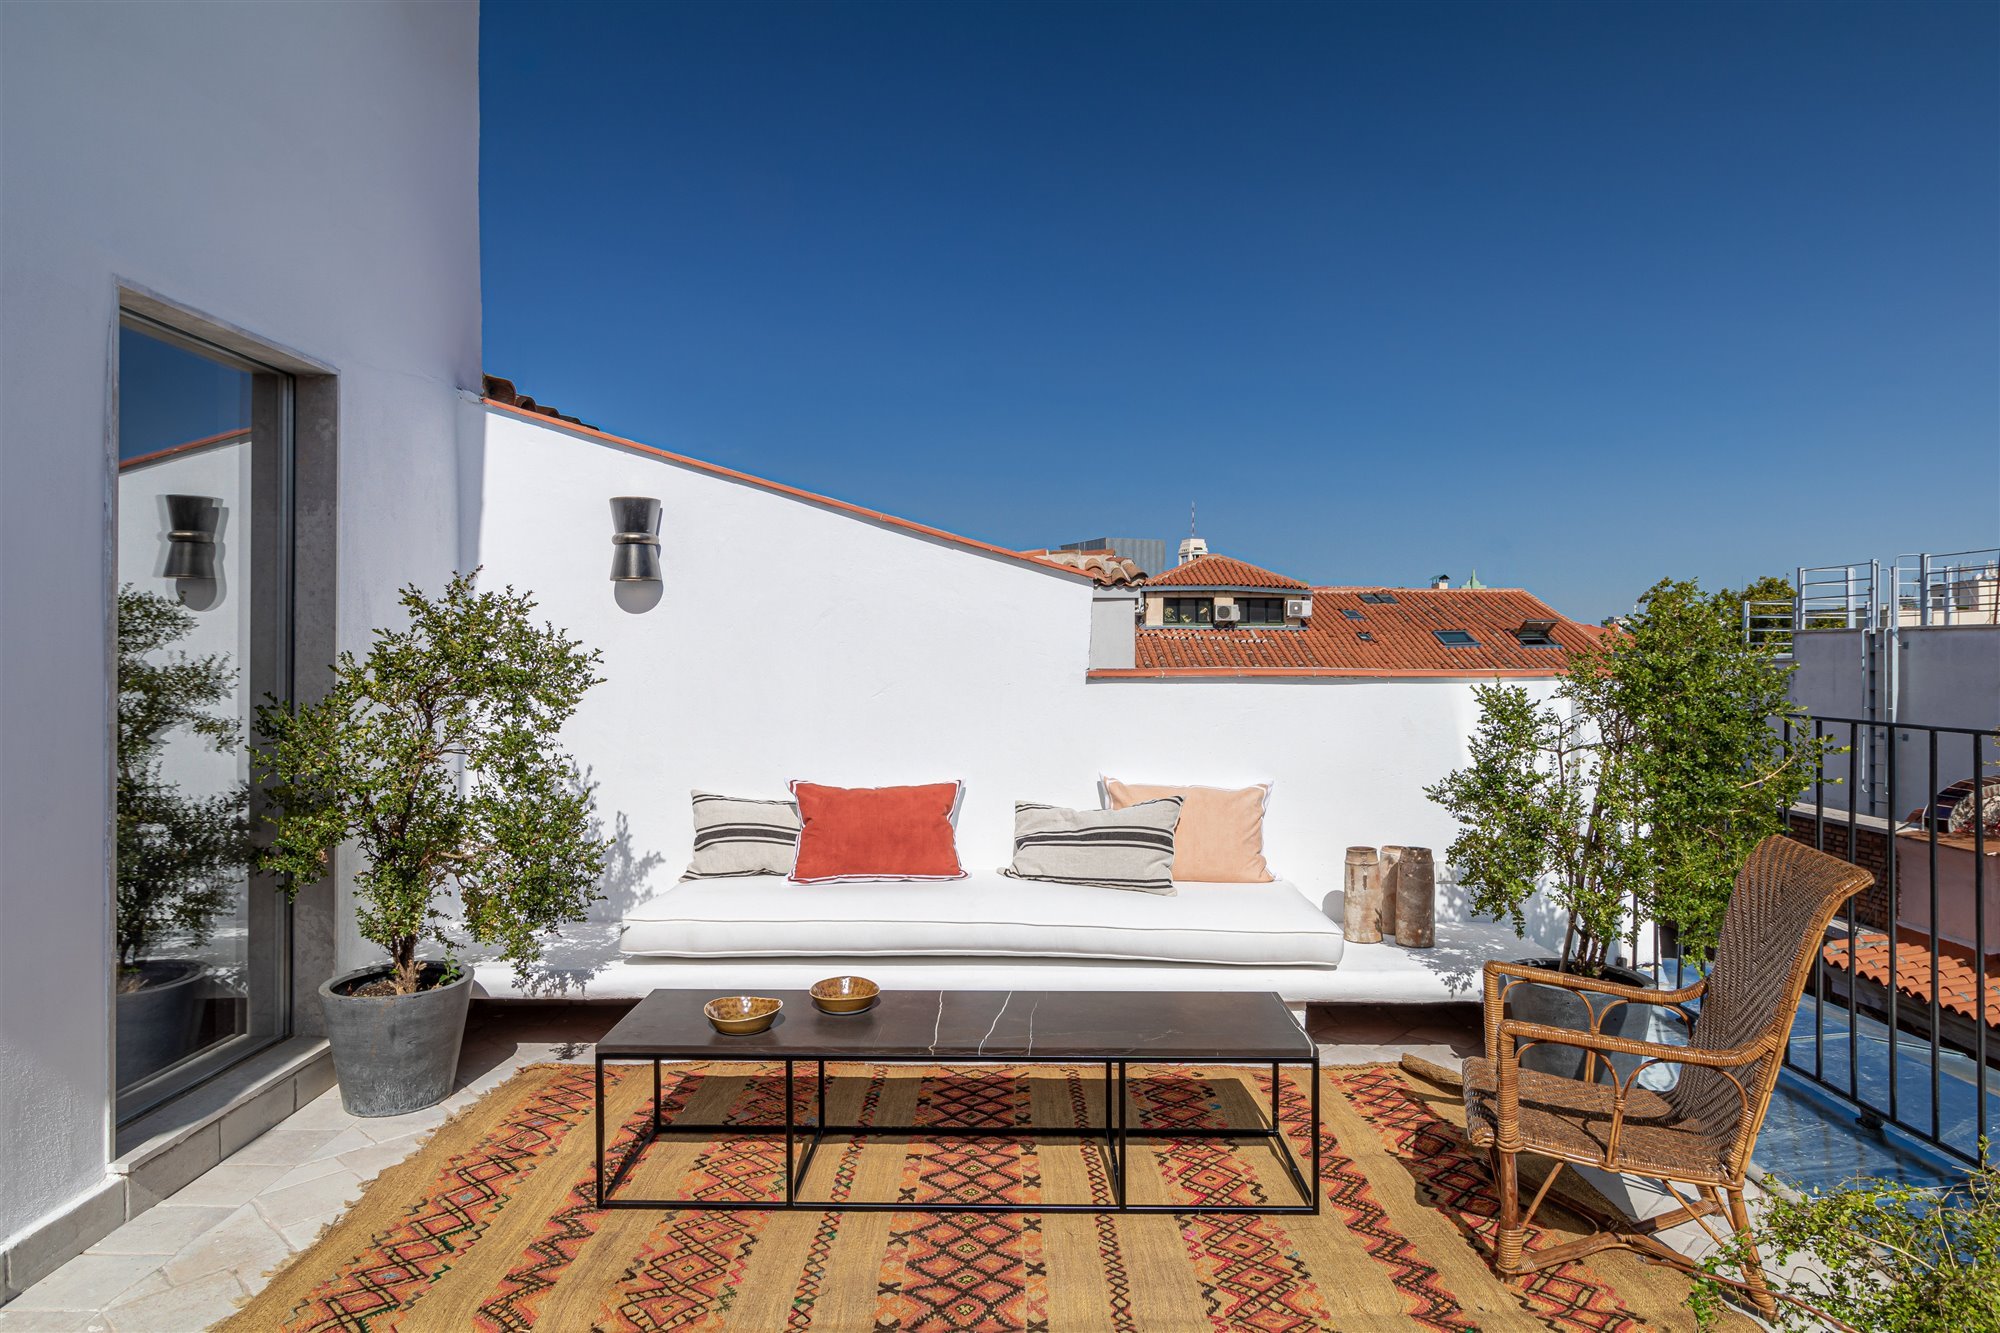 Atico en Madrid totalmente reformado con decoracion moderna terraza con salon exterior